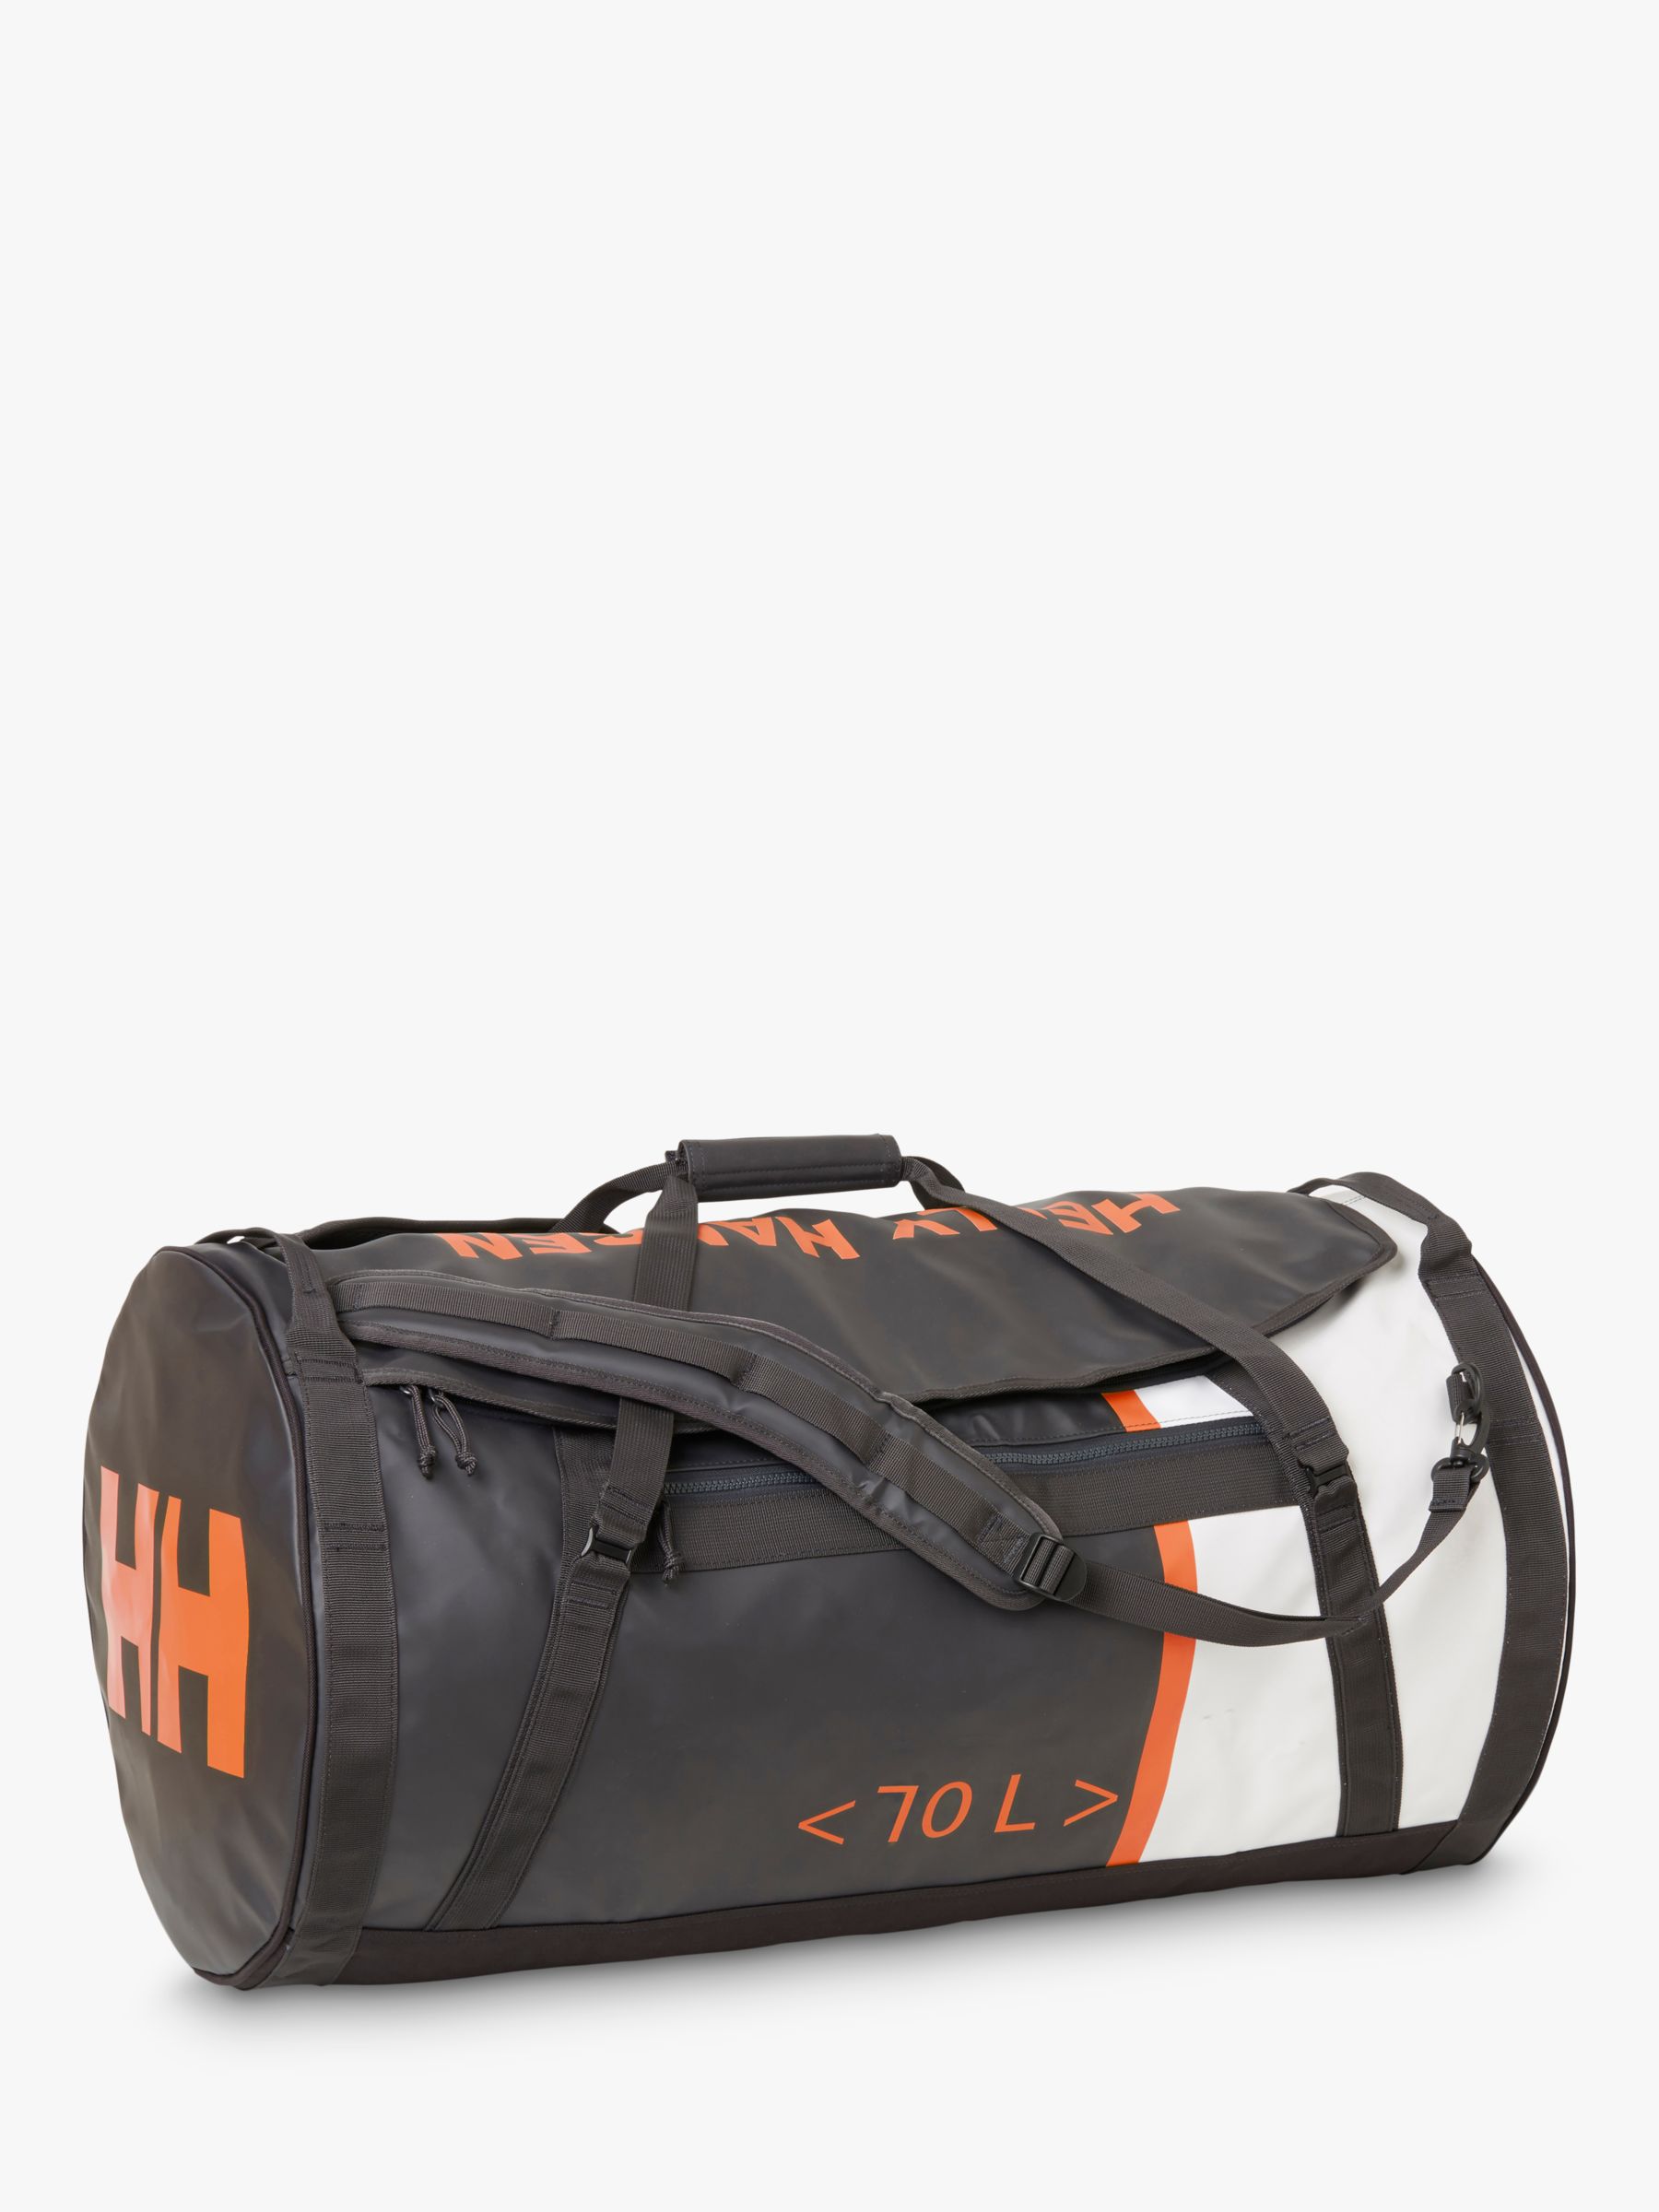 Helly Hansen 2 70L Duffel Bag at John Lewis & Partners